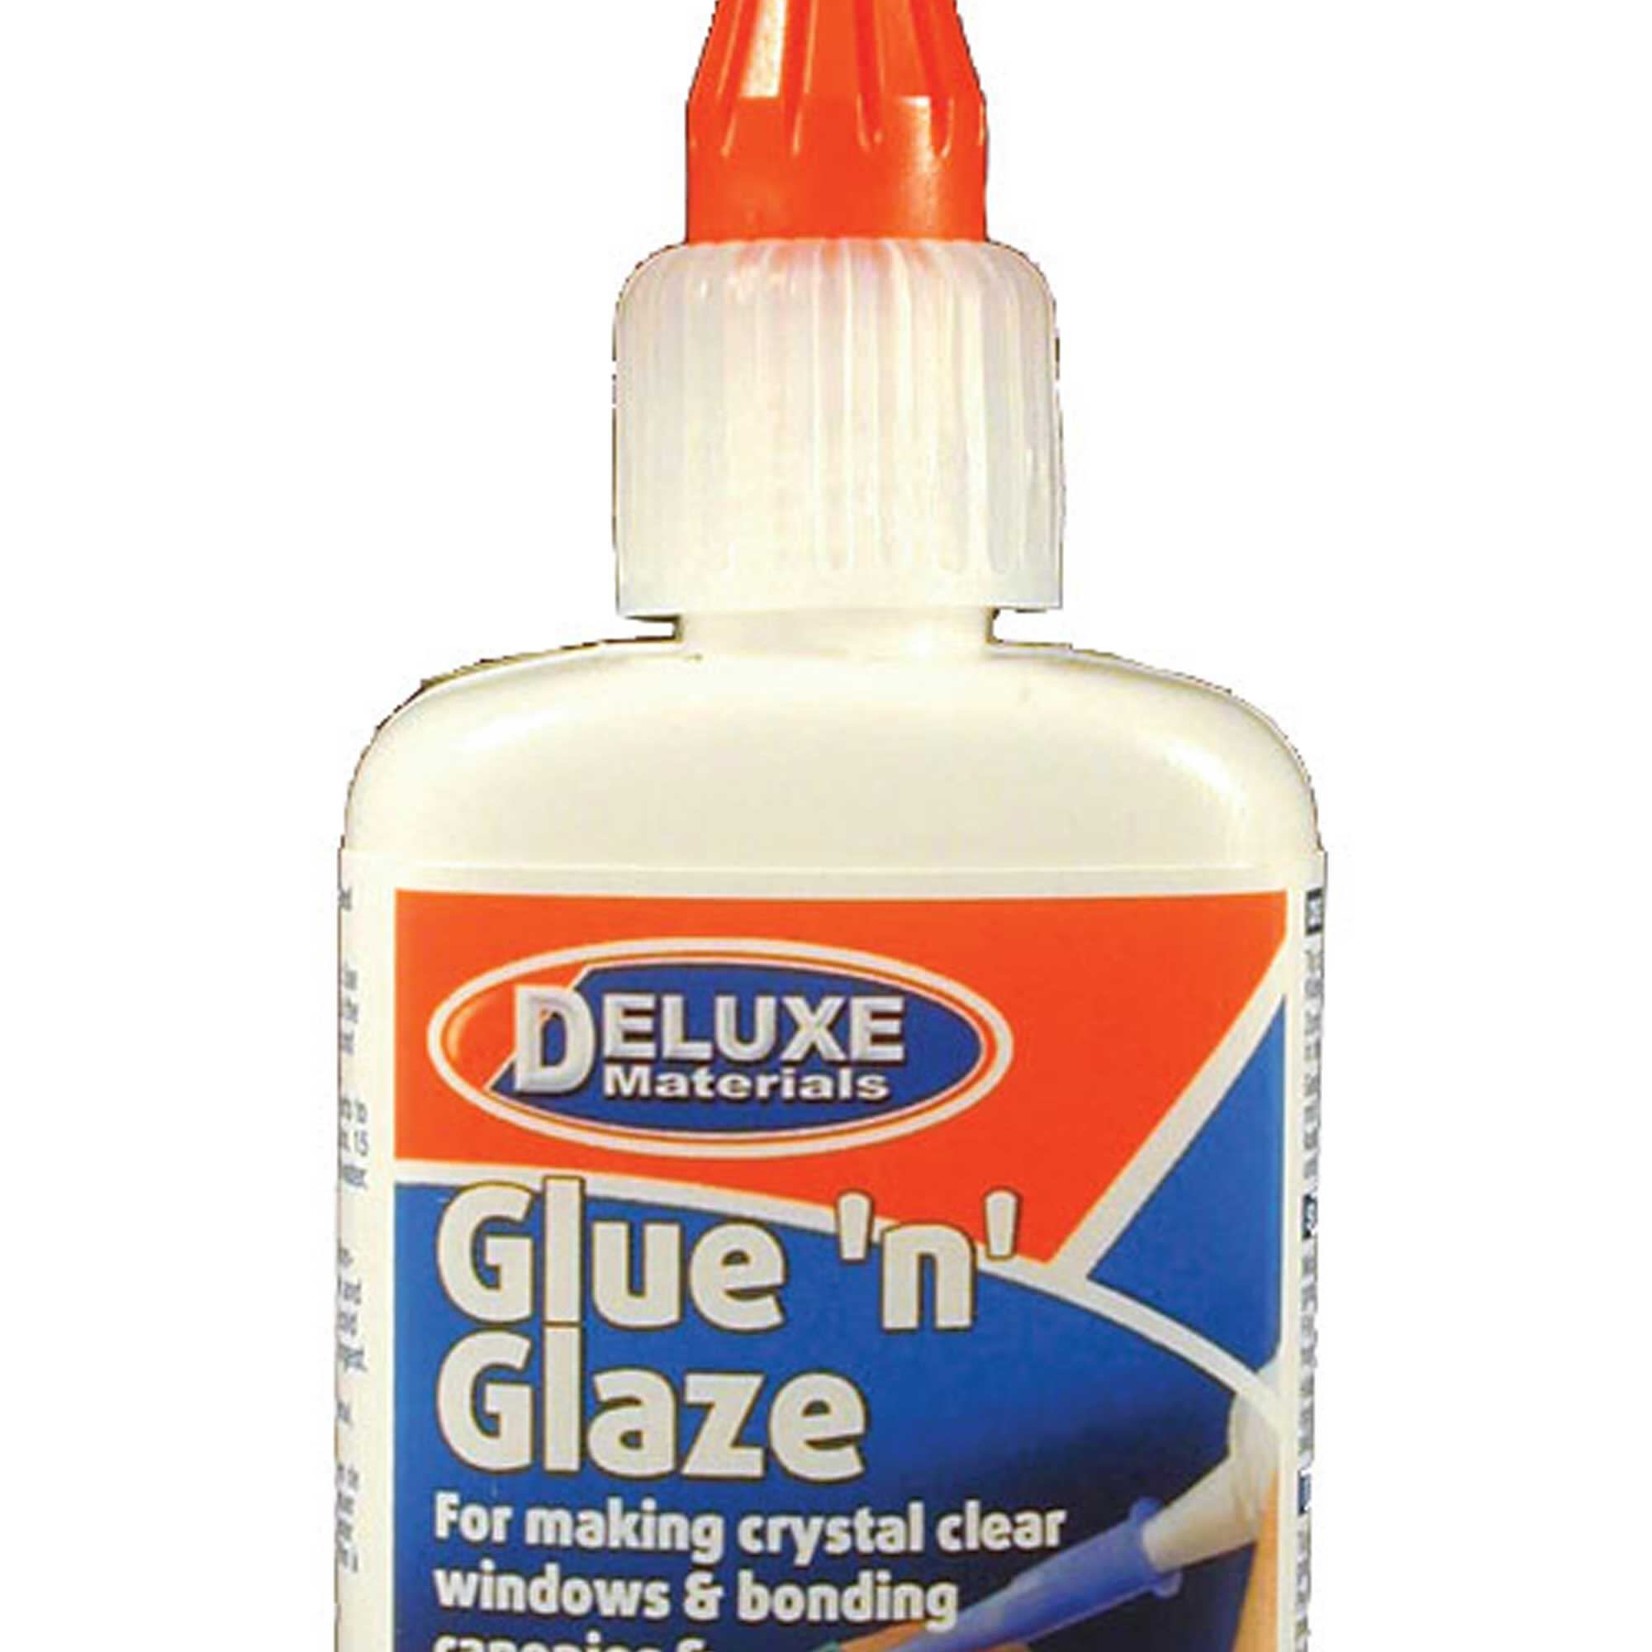 Deluxe Materials Glue 'n' Glaze; Wood, Metal, Plastic